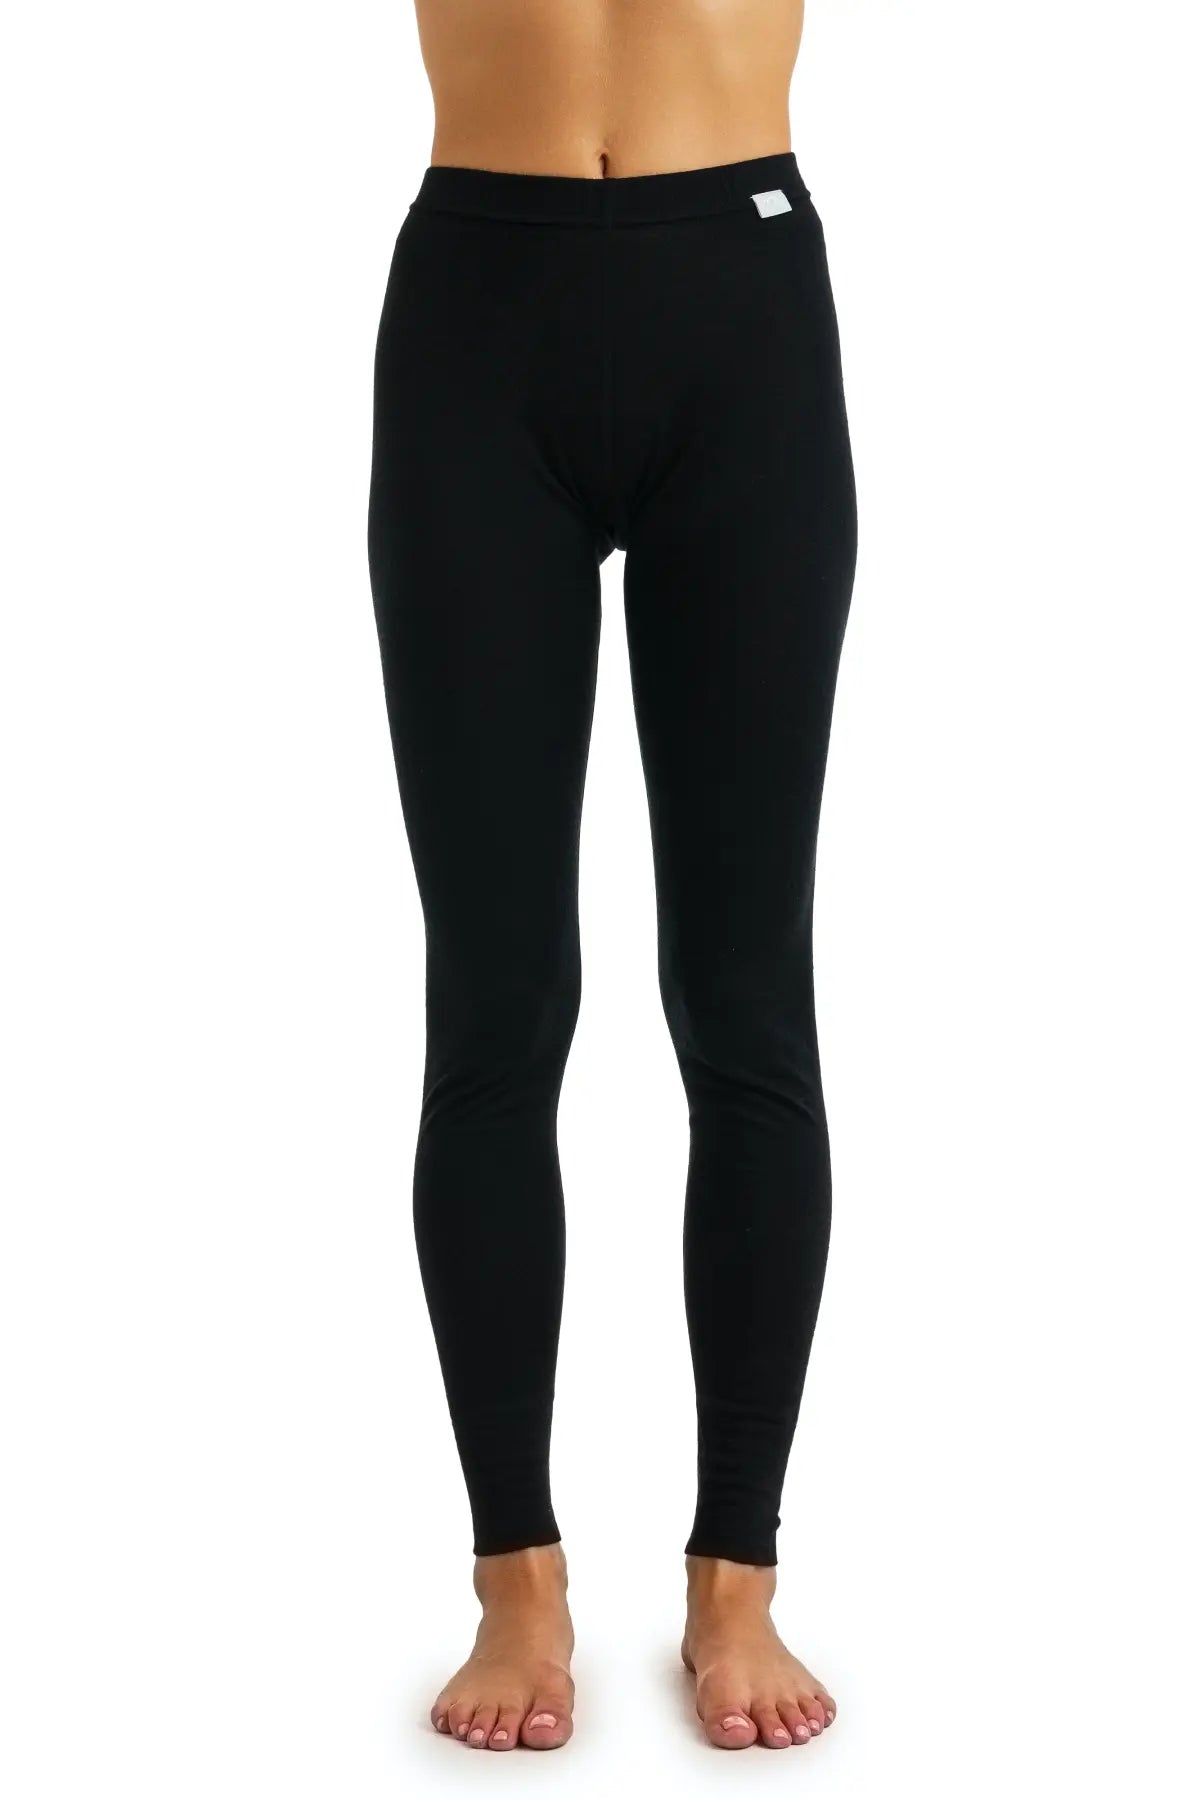 Women's Merino Wool Pants - Black Lightweight Leggings Base Layer, Bottom, Underwear, Thermal, Lightweight